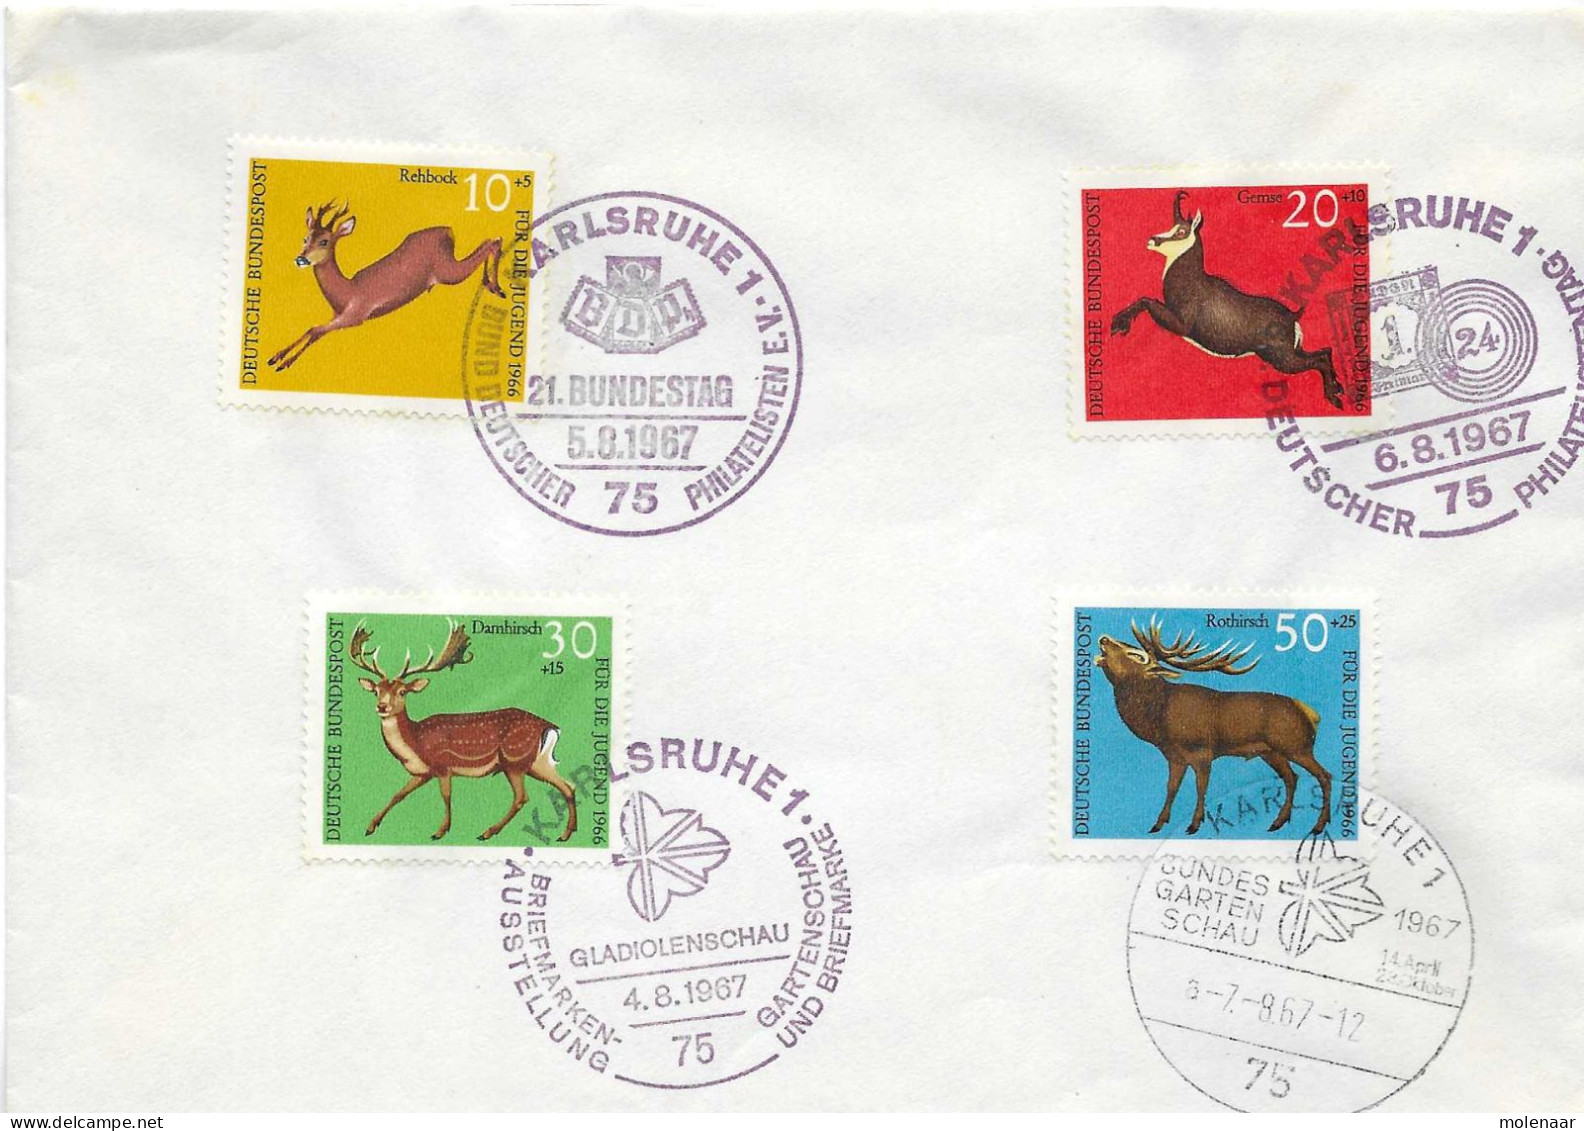 Postzegels > Europa > Duitsland > West-Duitsland > 1960-1969 > Brief Met 511-514 4 Verschillende Stempels (17300) - Lettres & Documents